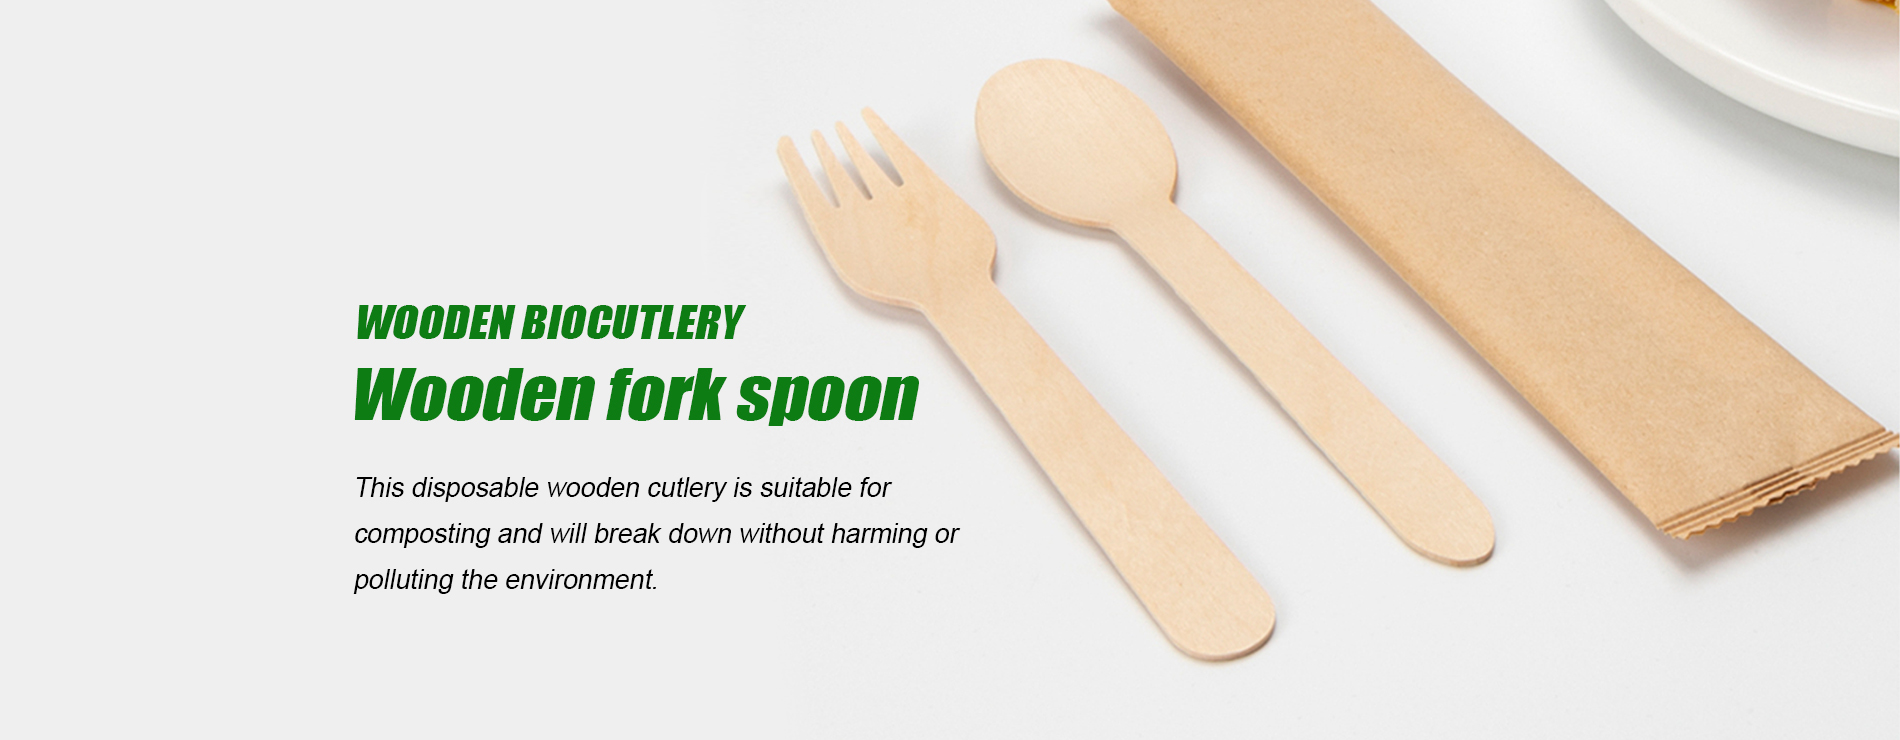 Wooden fork spoon